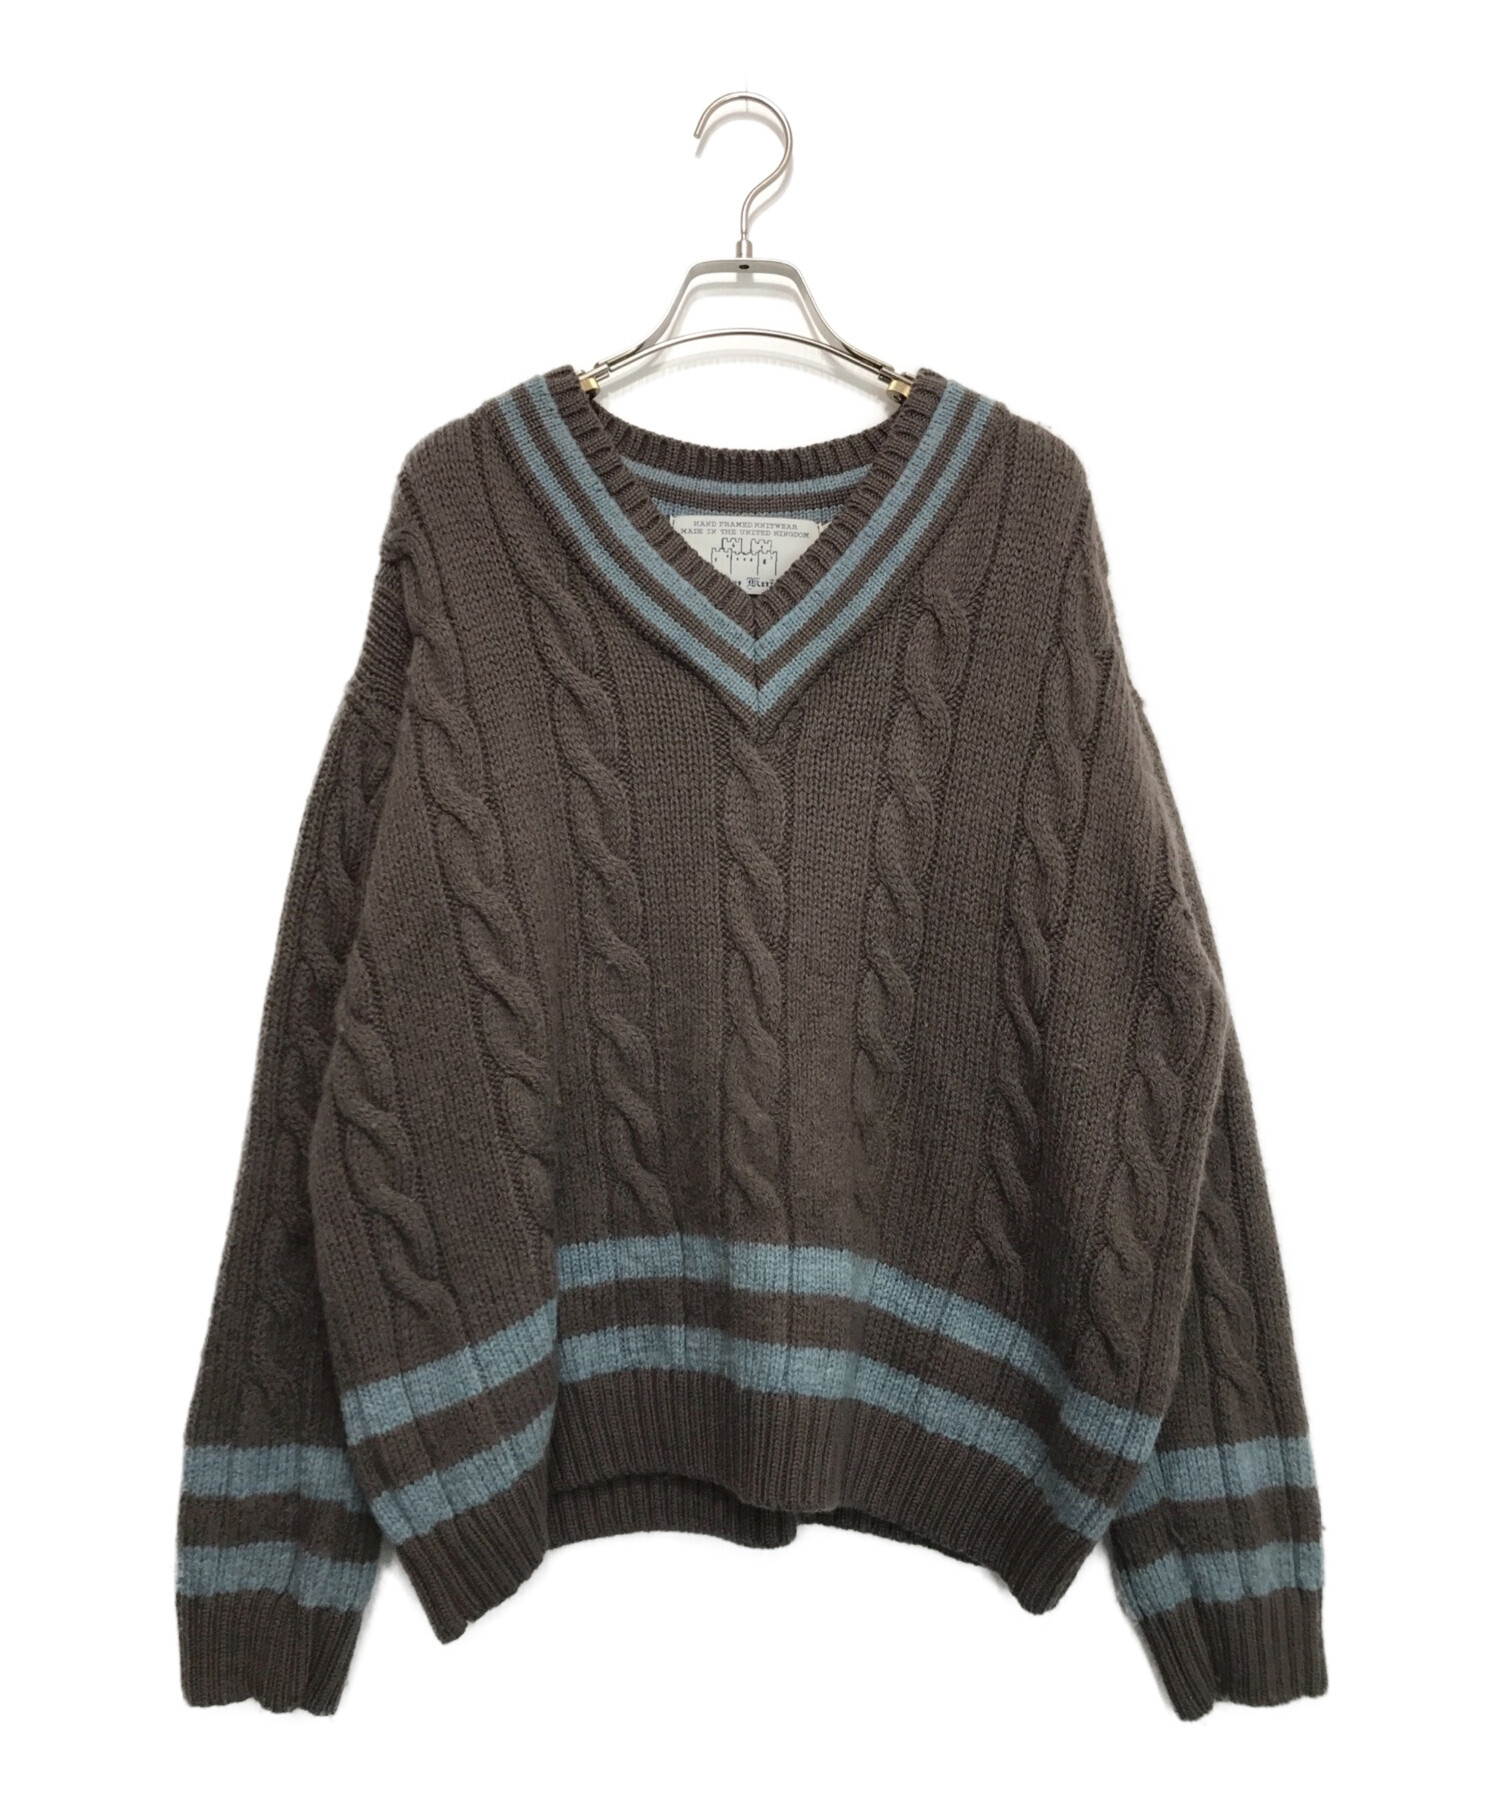 oldderby Knitwear (オールドダービーニットウェア) チルデンセーター ブラウン サイズ:L